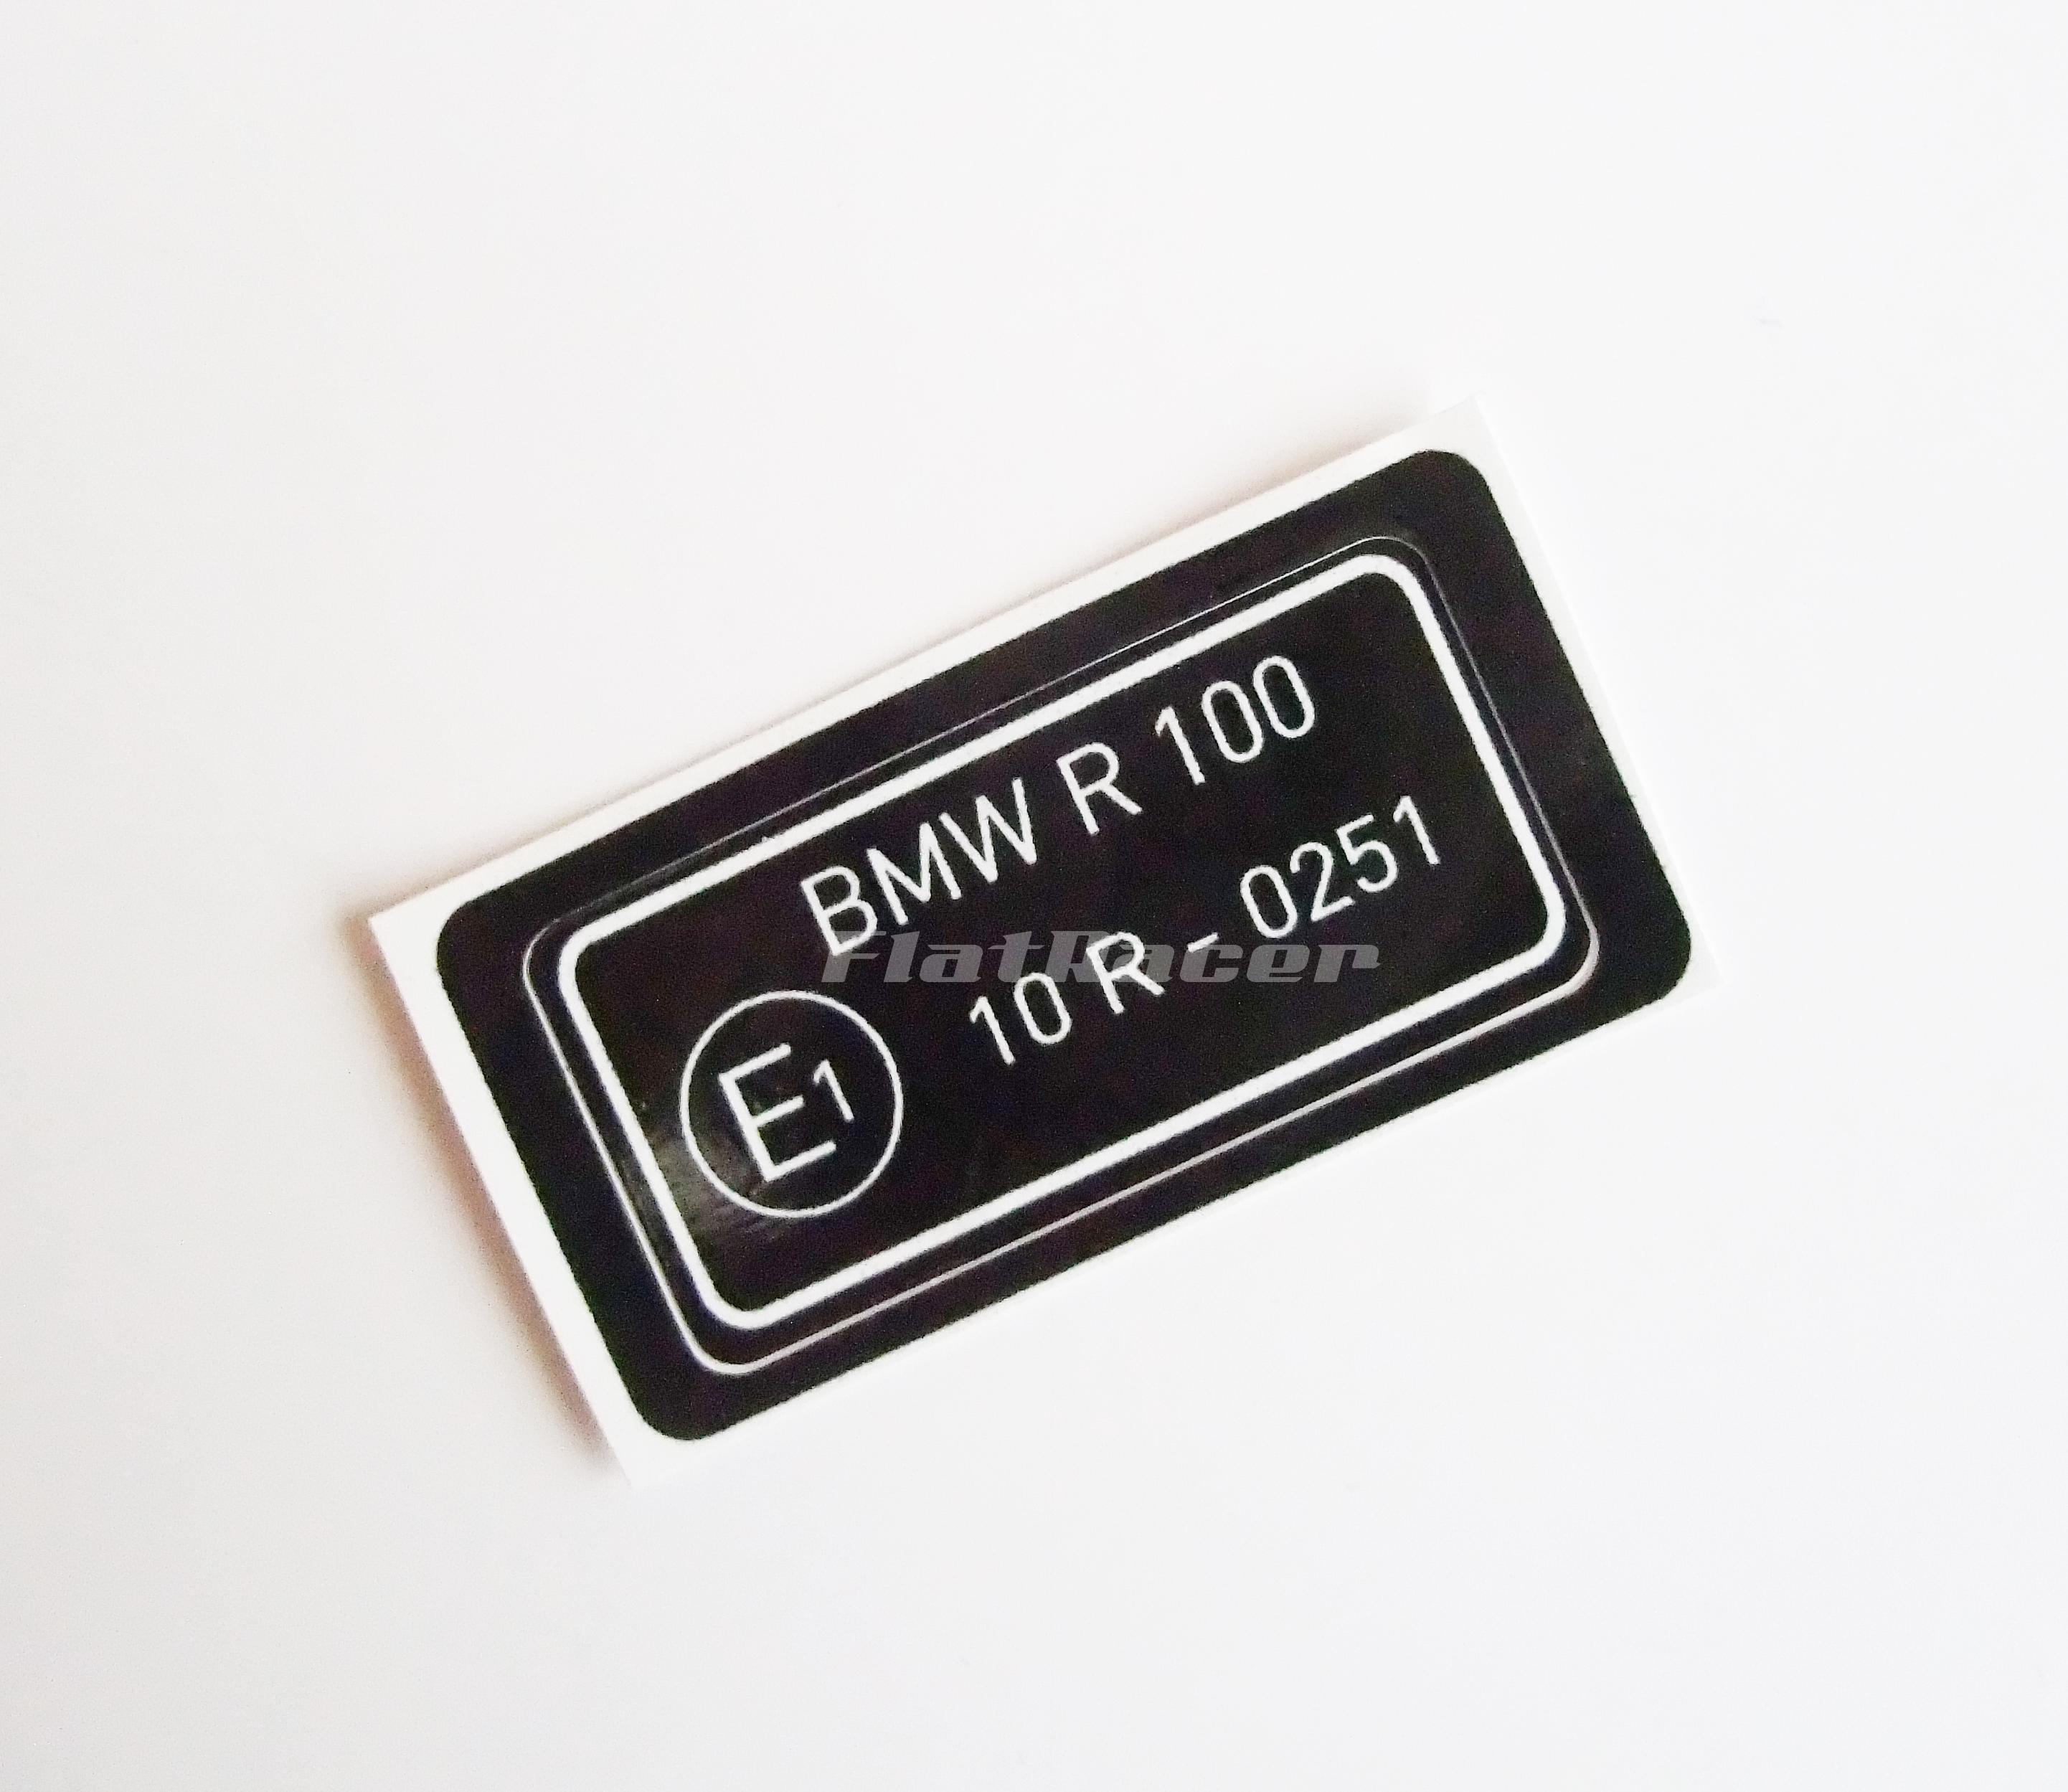 BMW R100/7 Series 7 (76-84) E1 homologation sticker - 10R - 0251